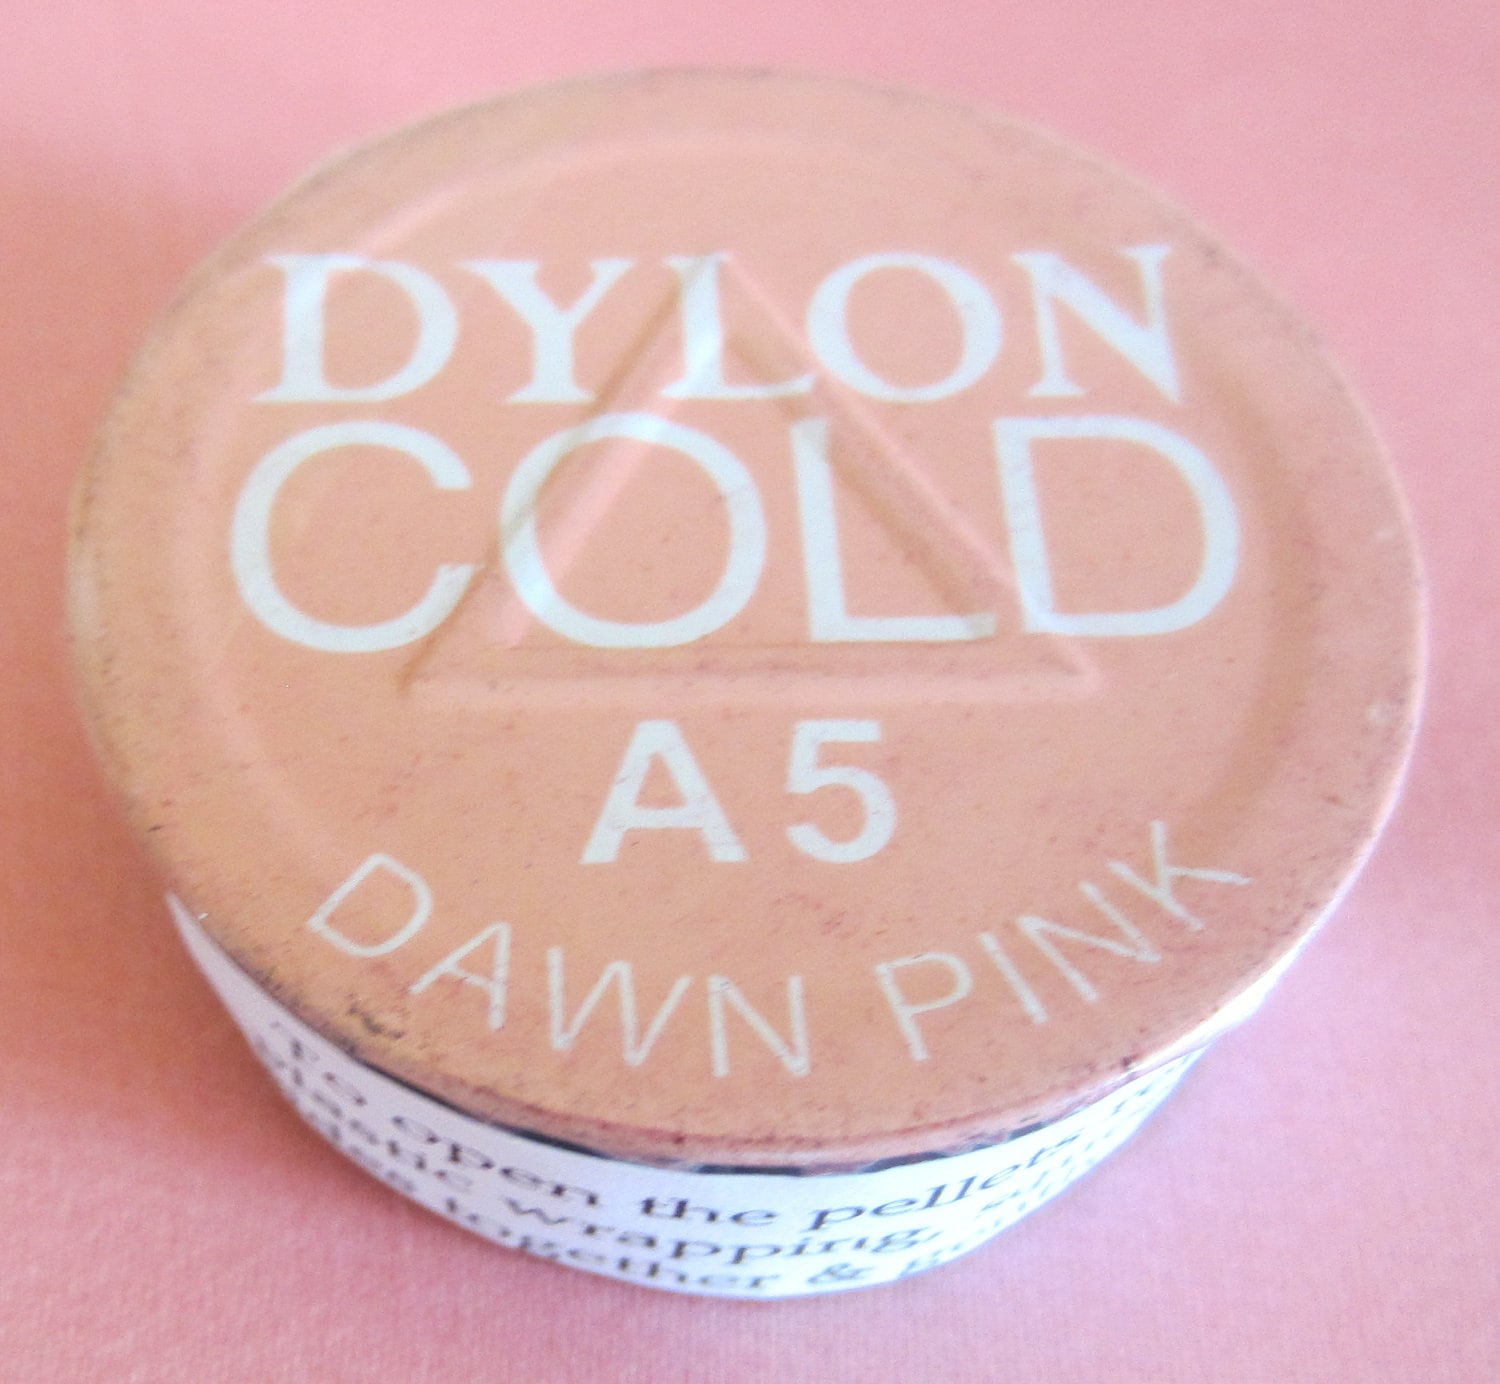 Dawn Pink Cold Dylon Fabric Hand Dye, Permanent Clothes Dye